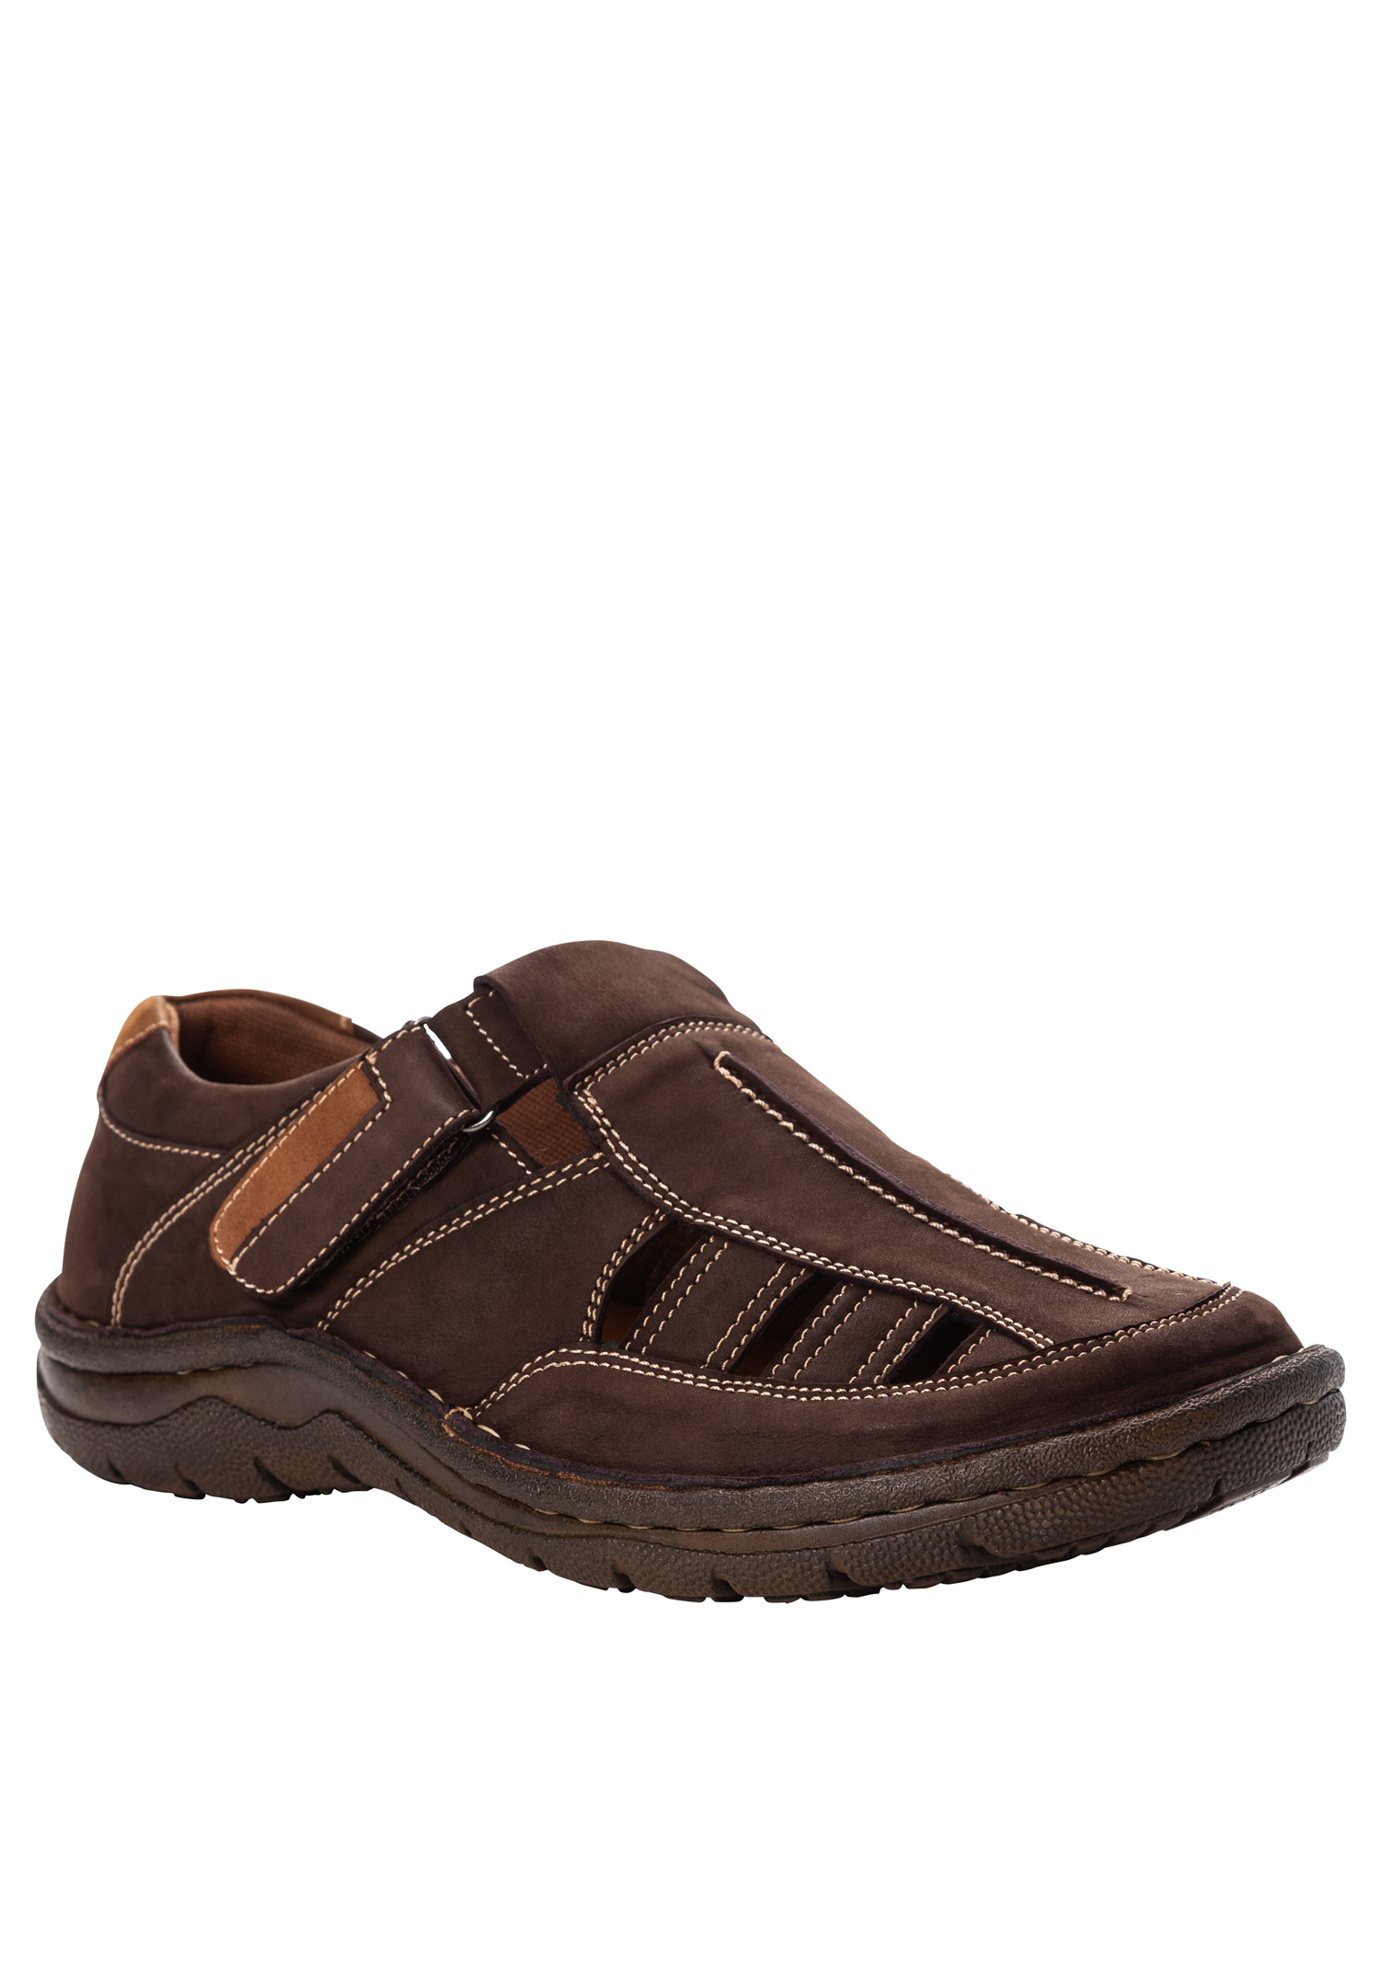 Men&apos;s Jack Fisherman Style Sandals, 